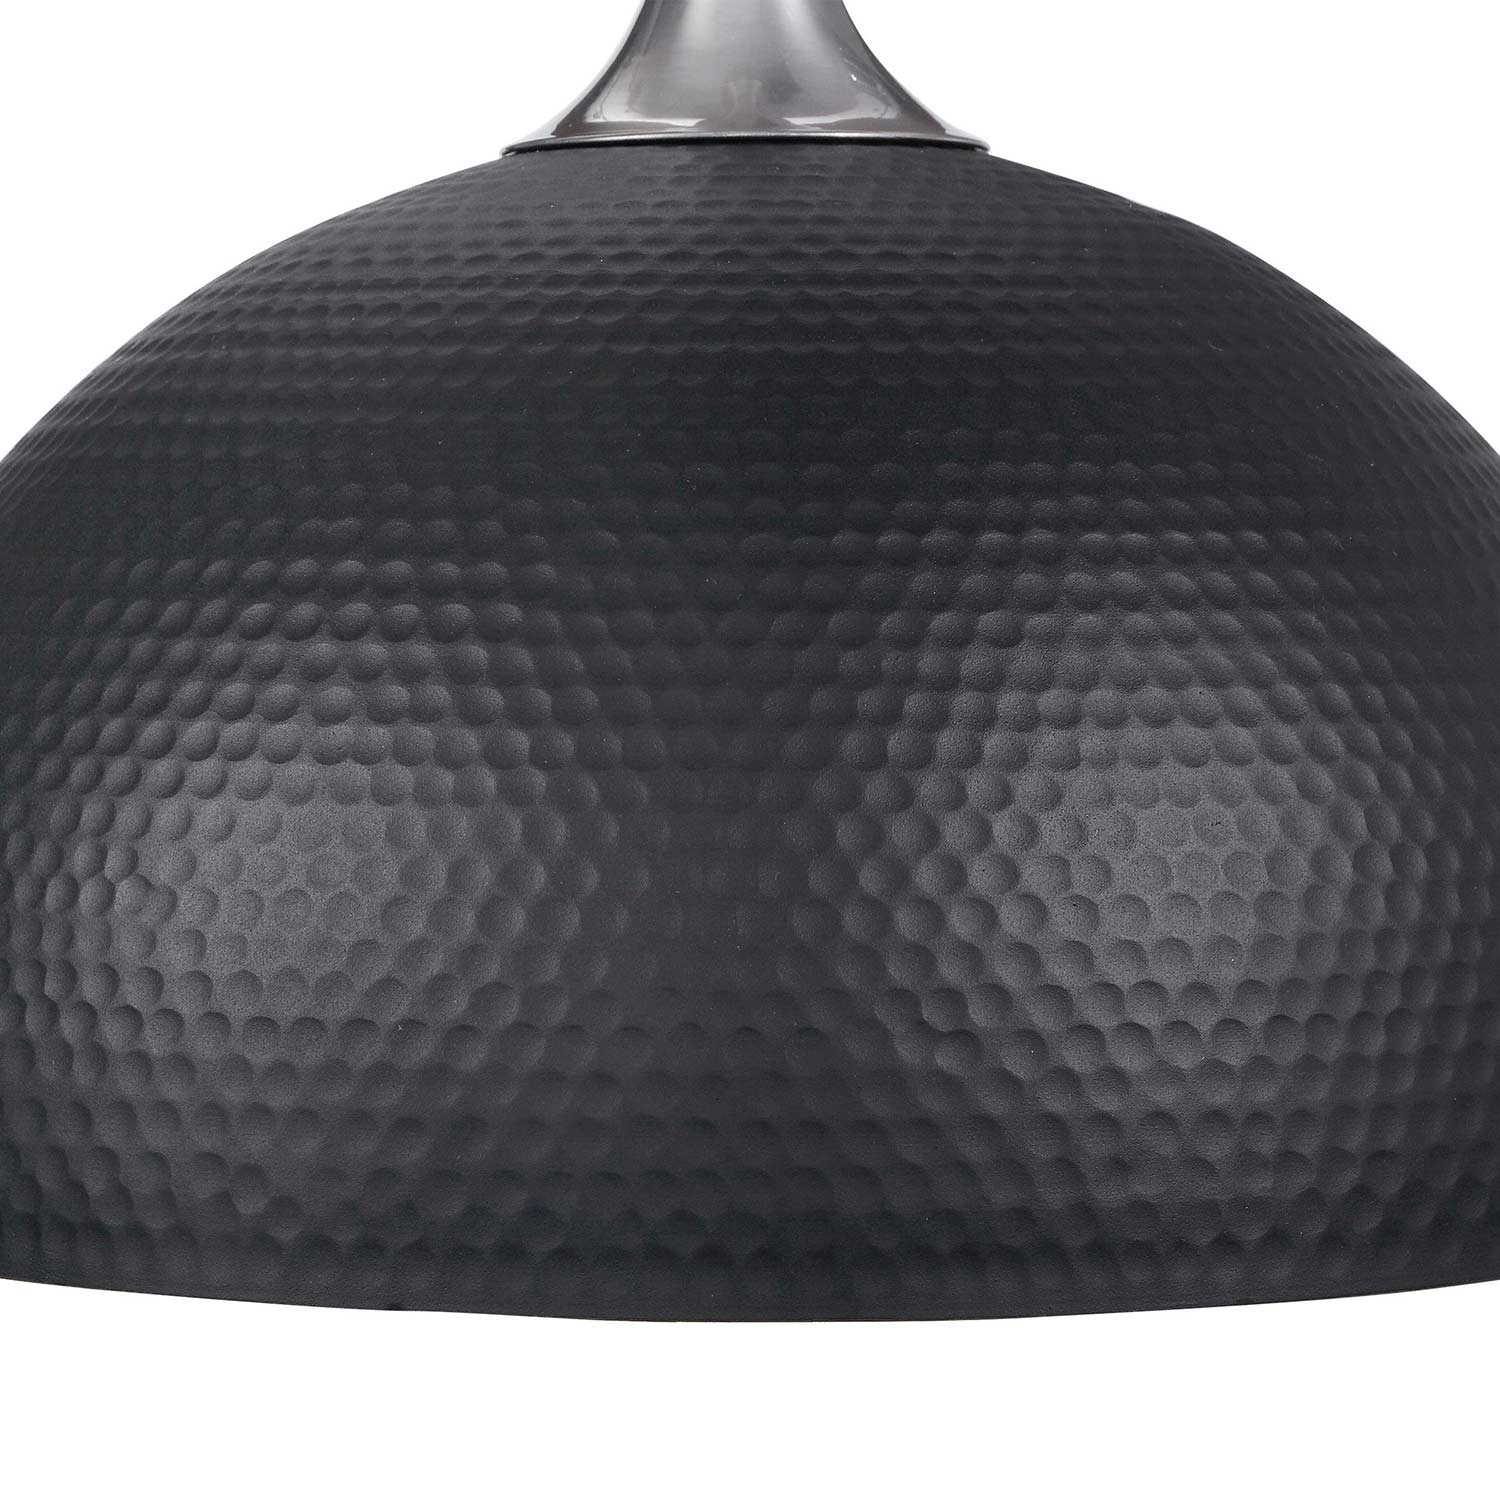 Uttermost Raynott Black 1 Light Dome Pendant